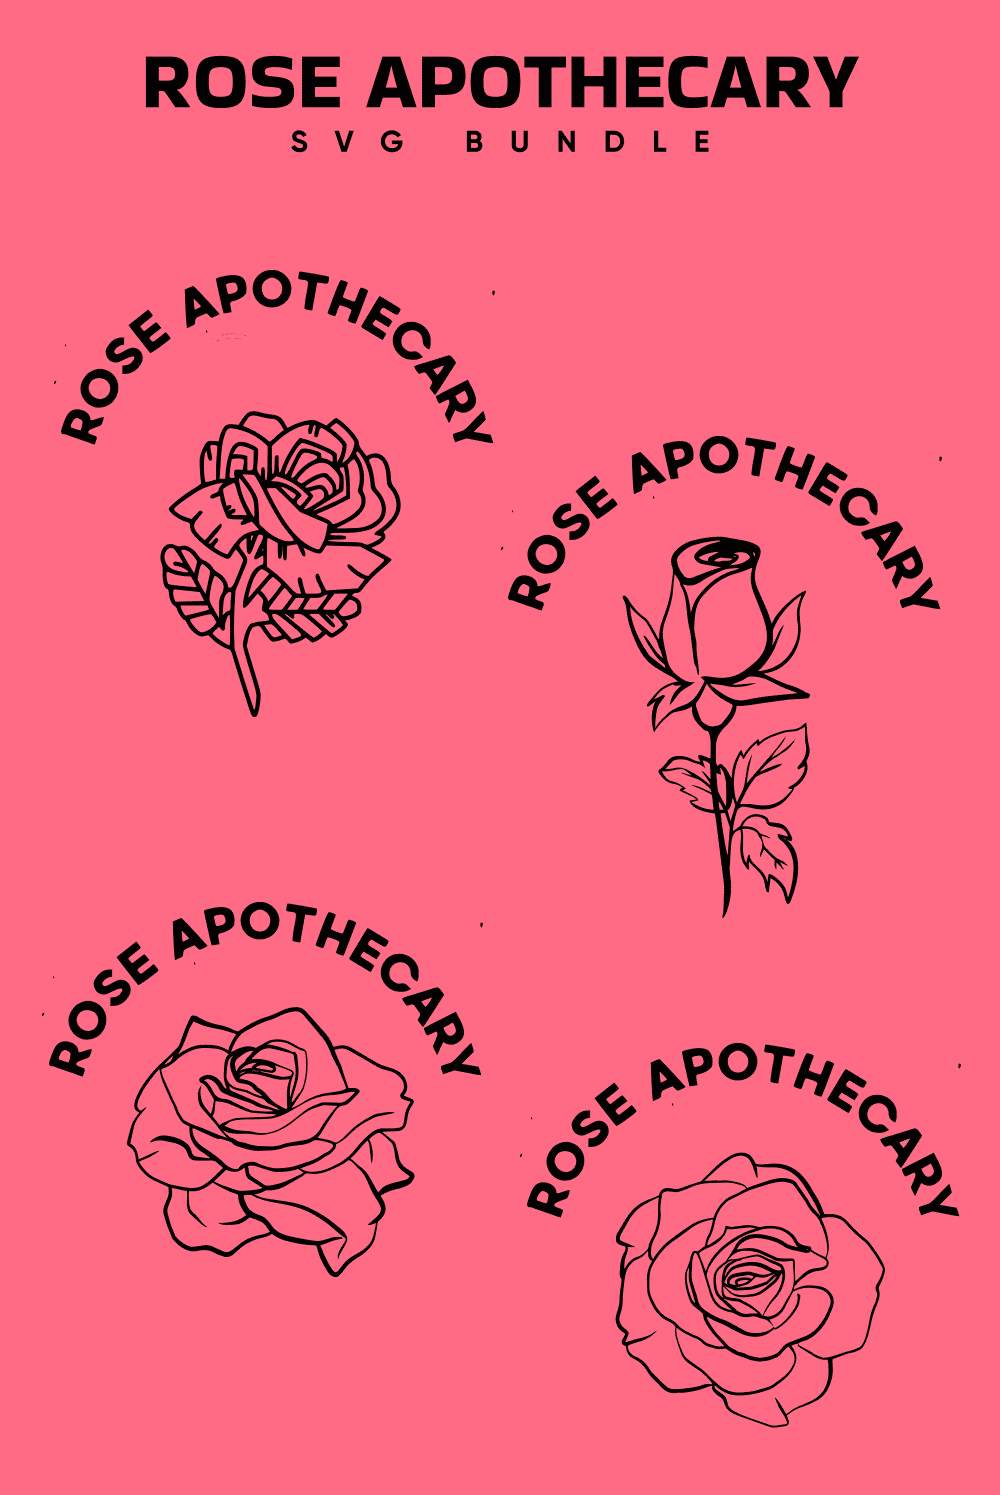 Rose Apothecary Svg - Pinterest.